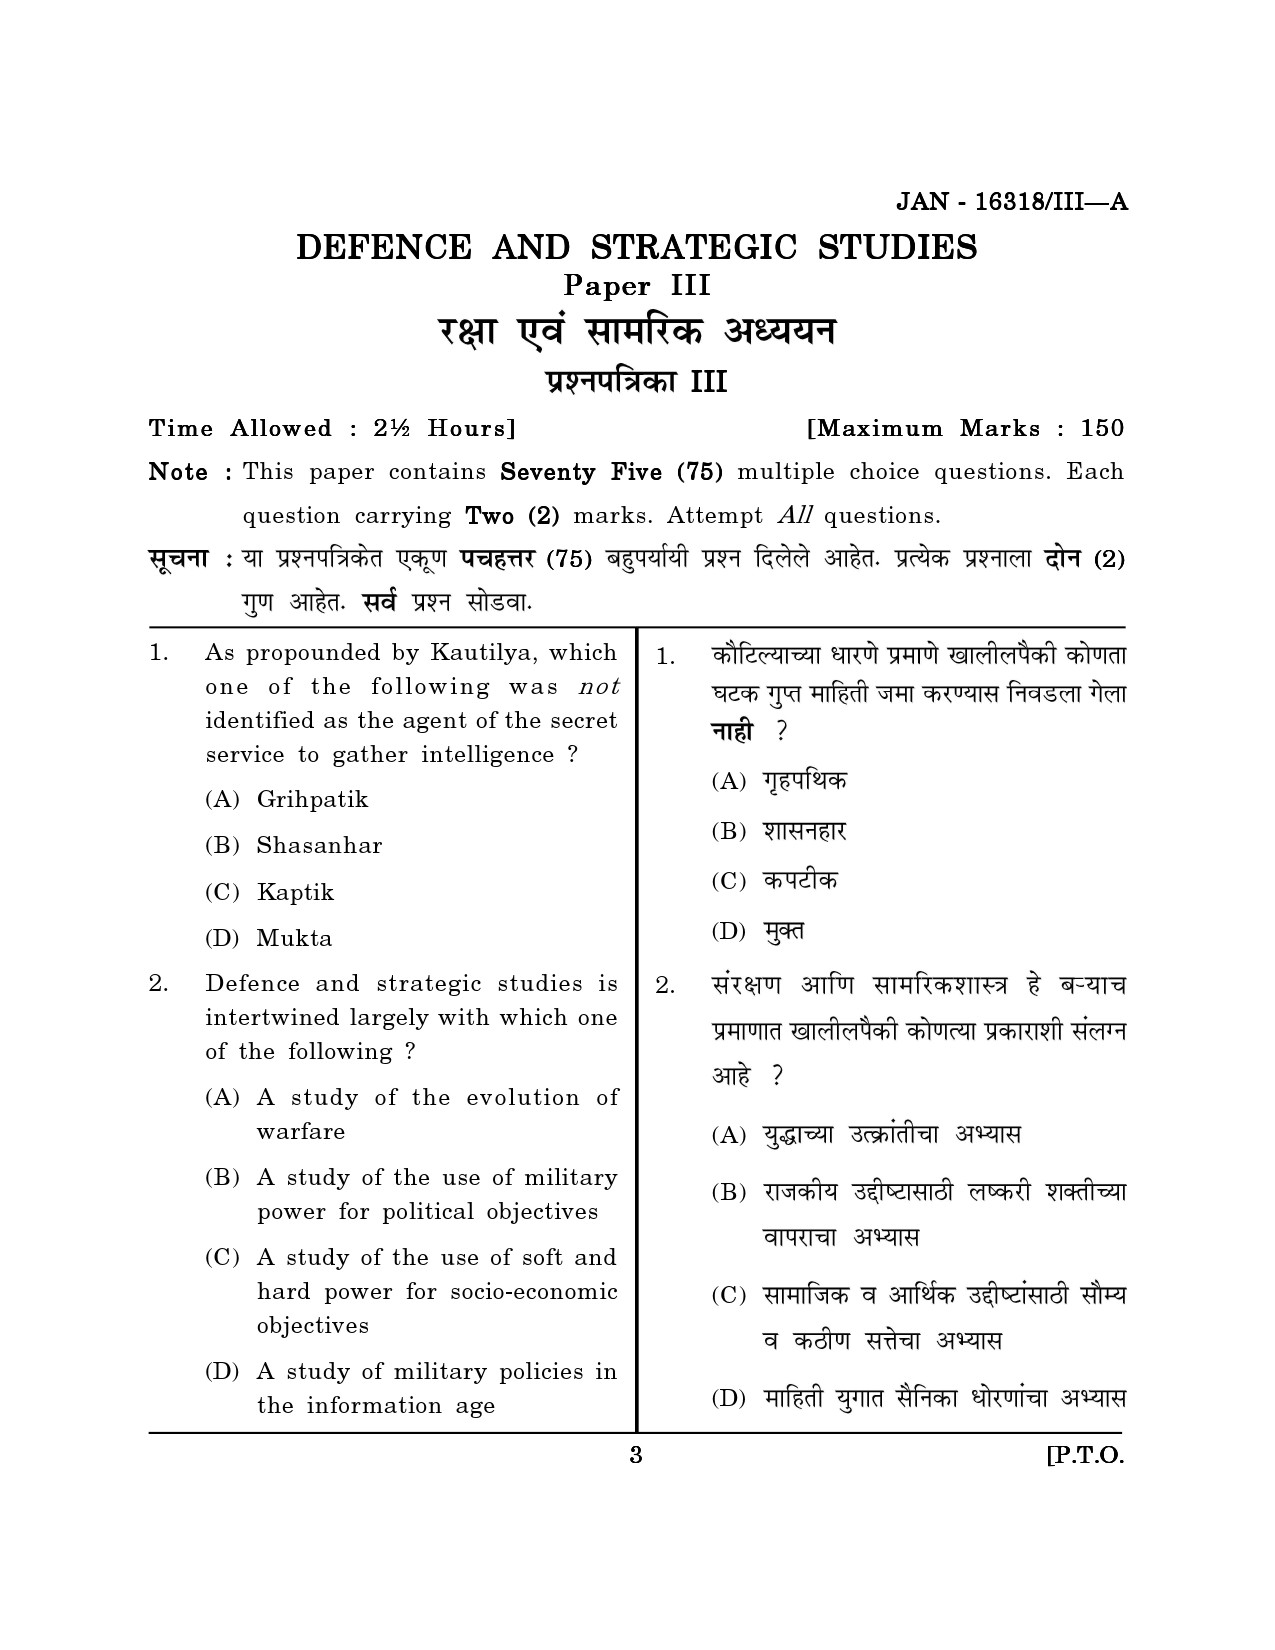 Maharashtra SET Defence and Strategic Studies Question Paper III January 2018 2